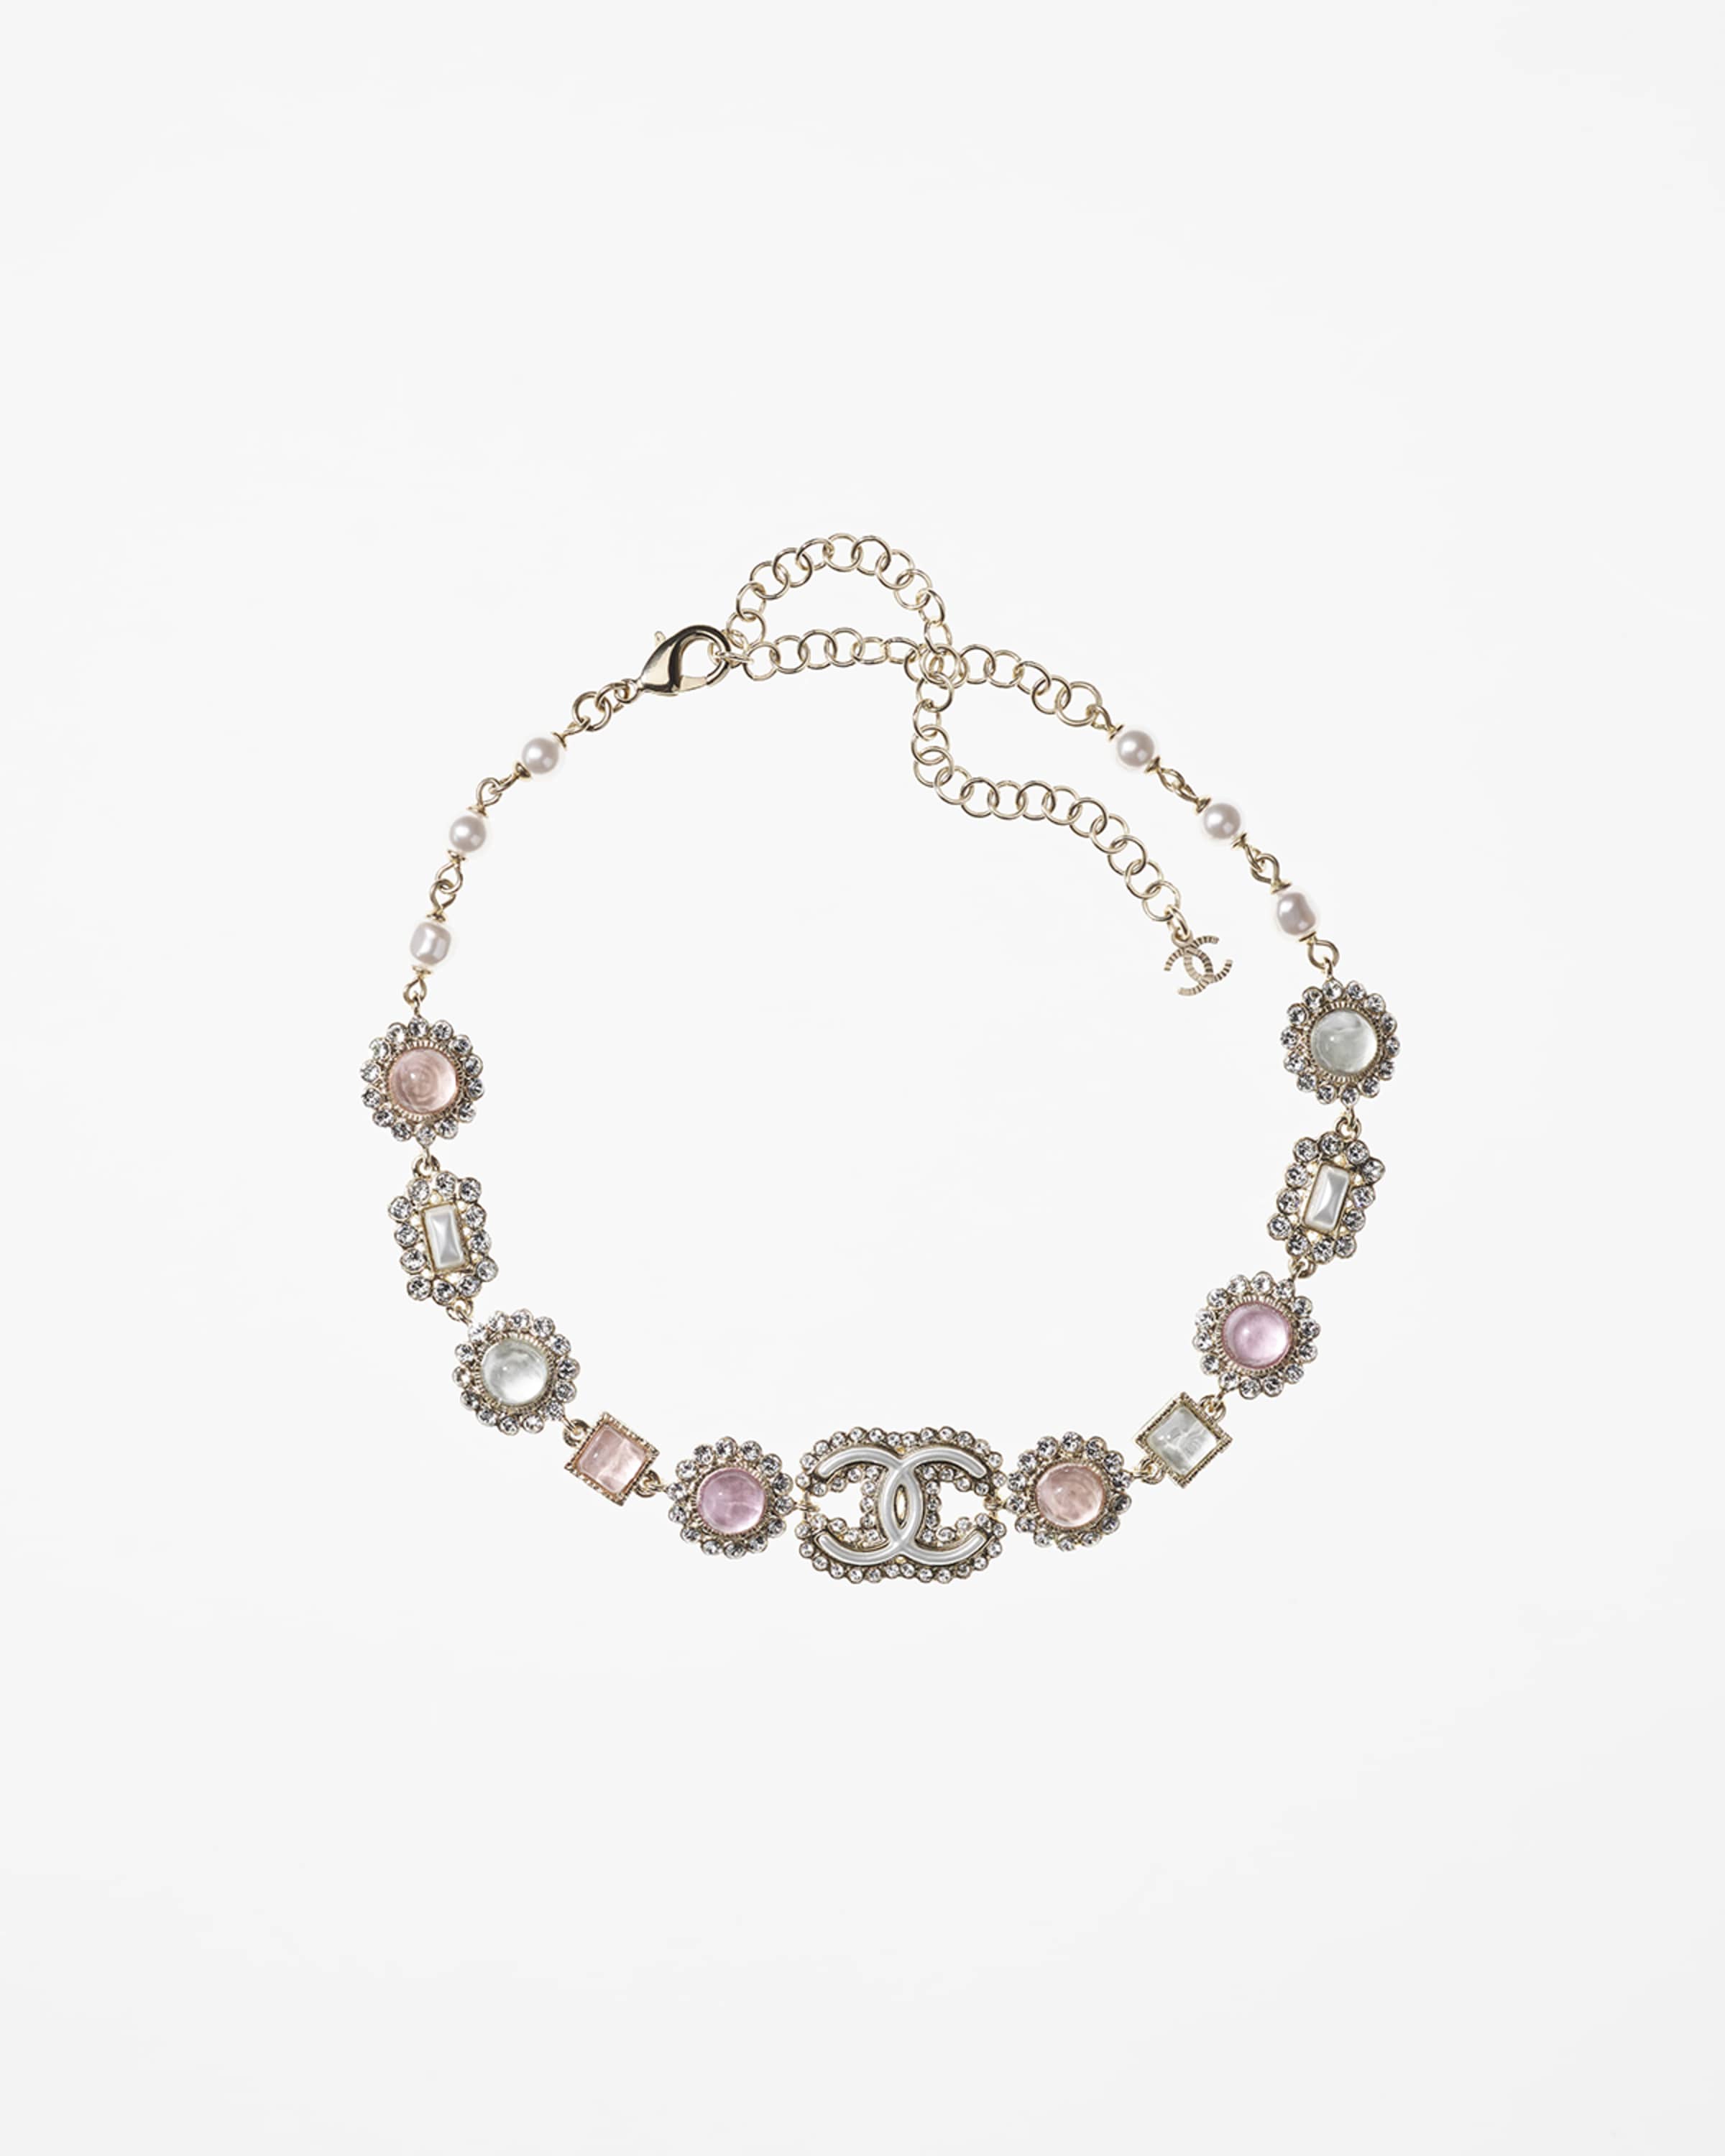 Neiman Marcus Chanel Jewelry